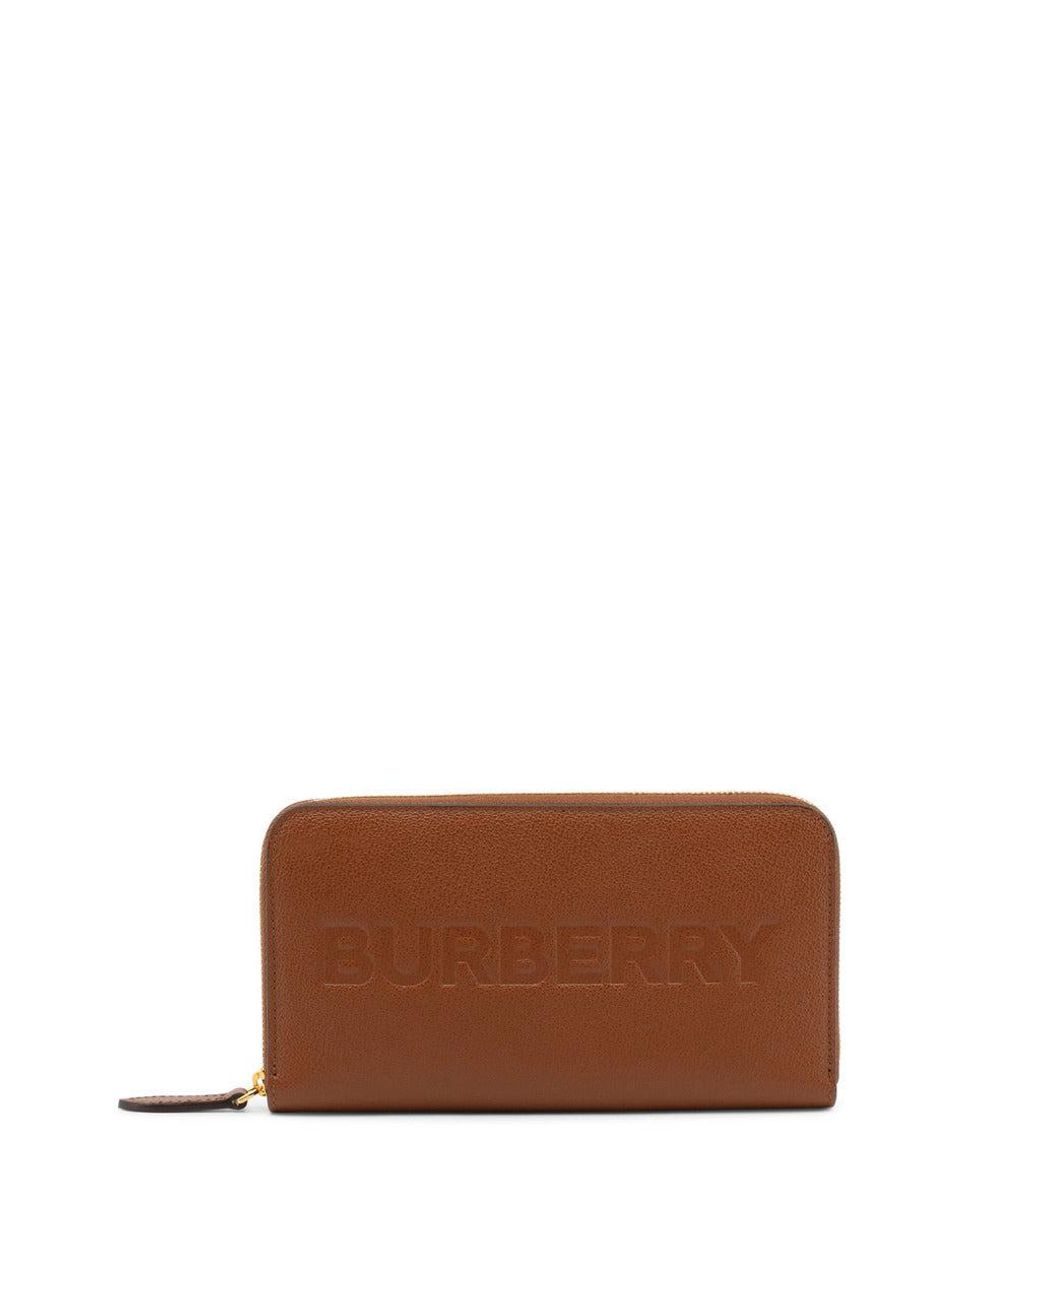 Burberry Check Embossed Zip Around Wallet